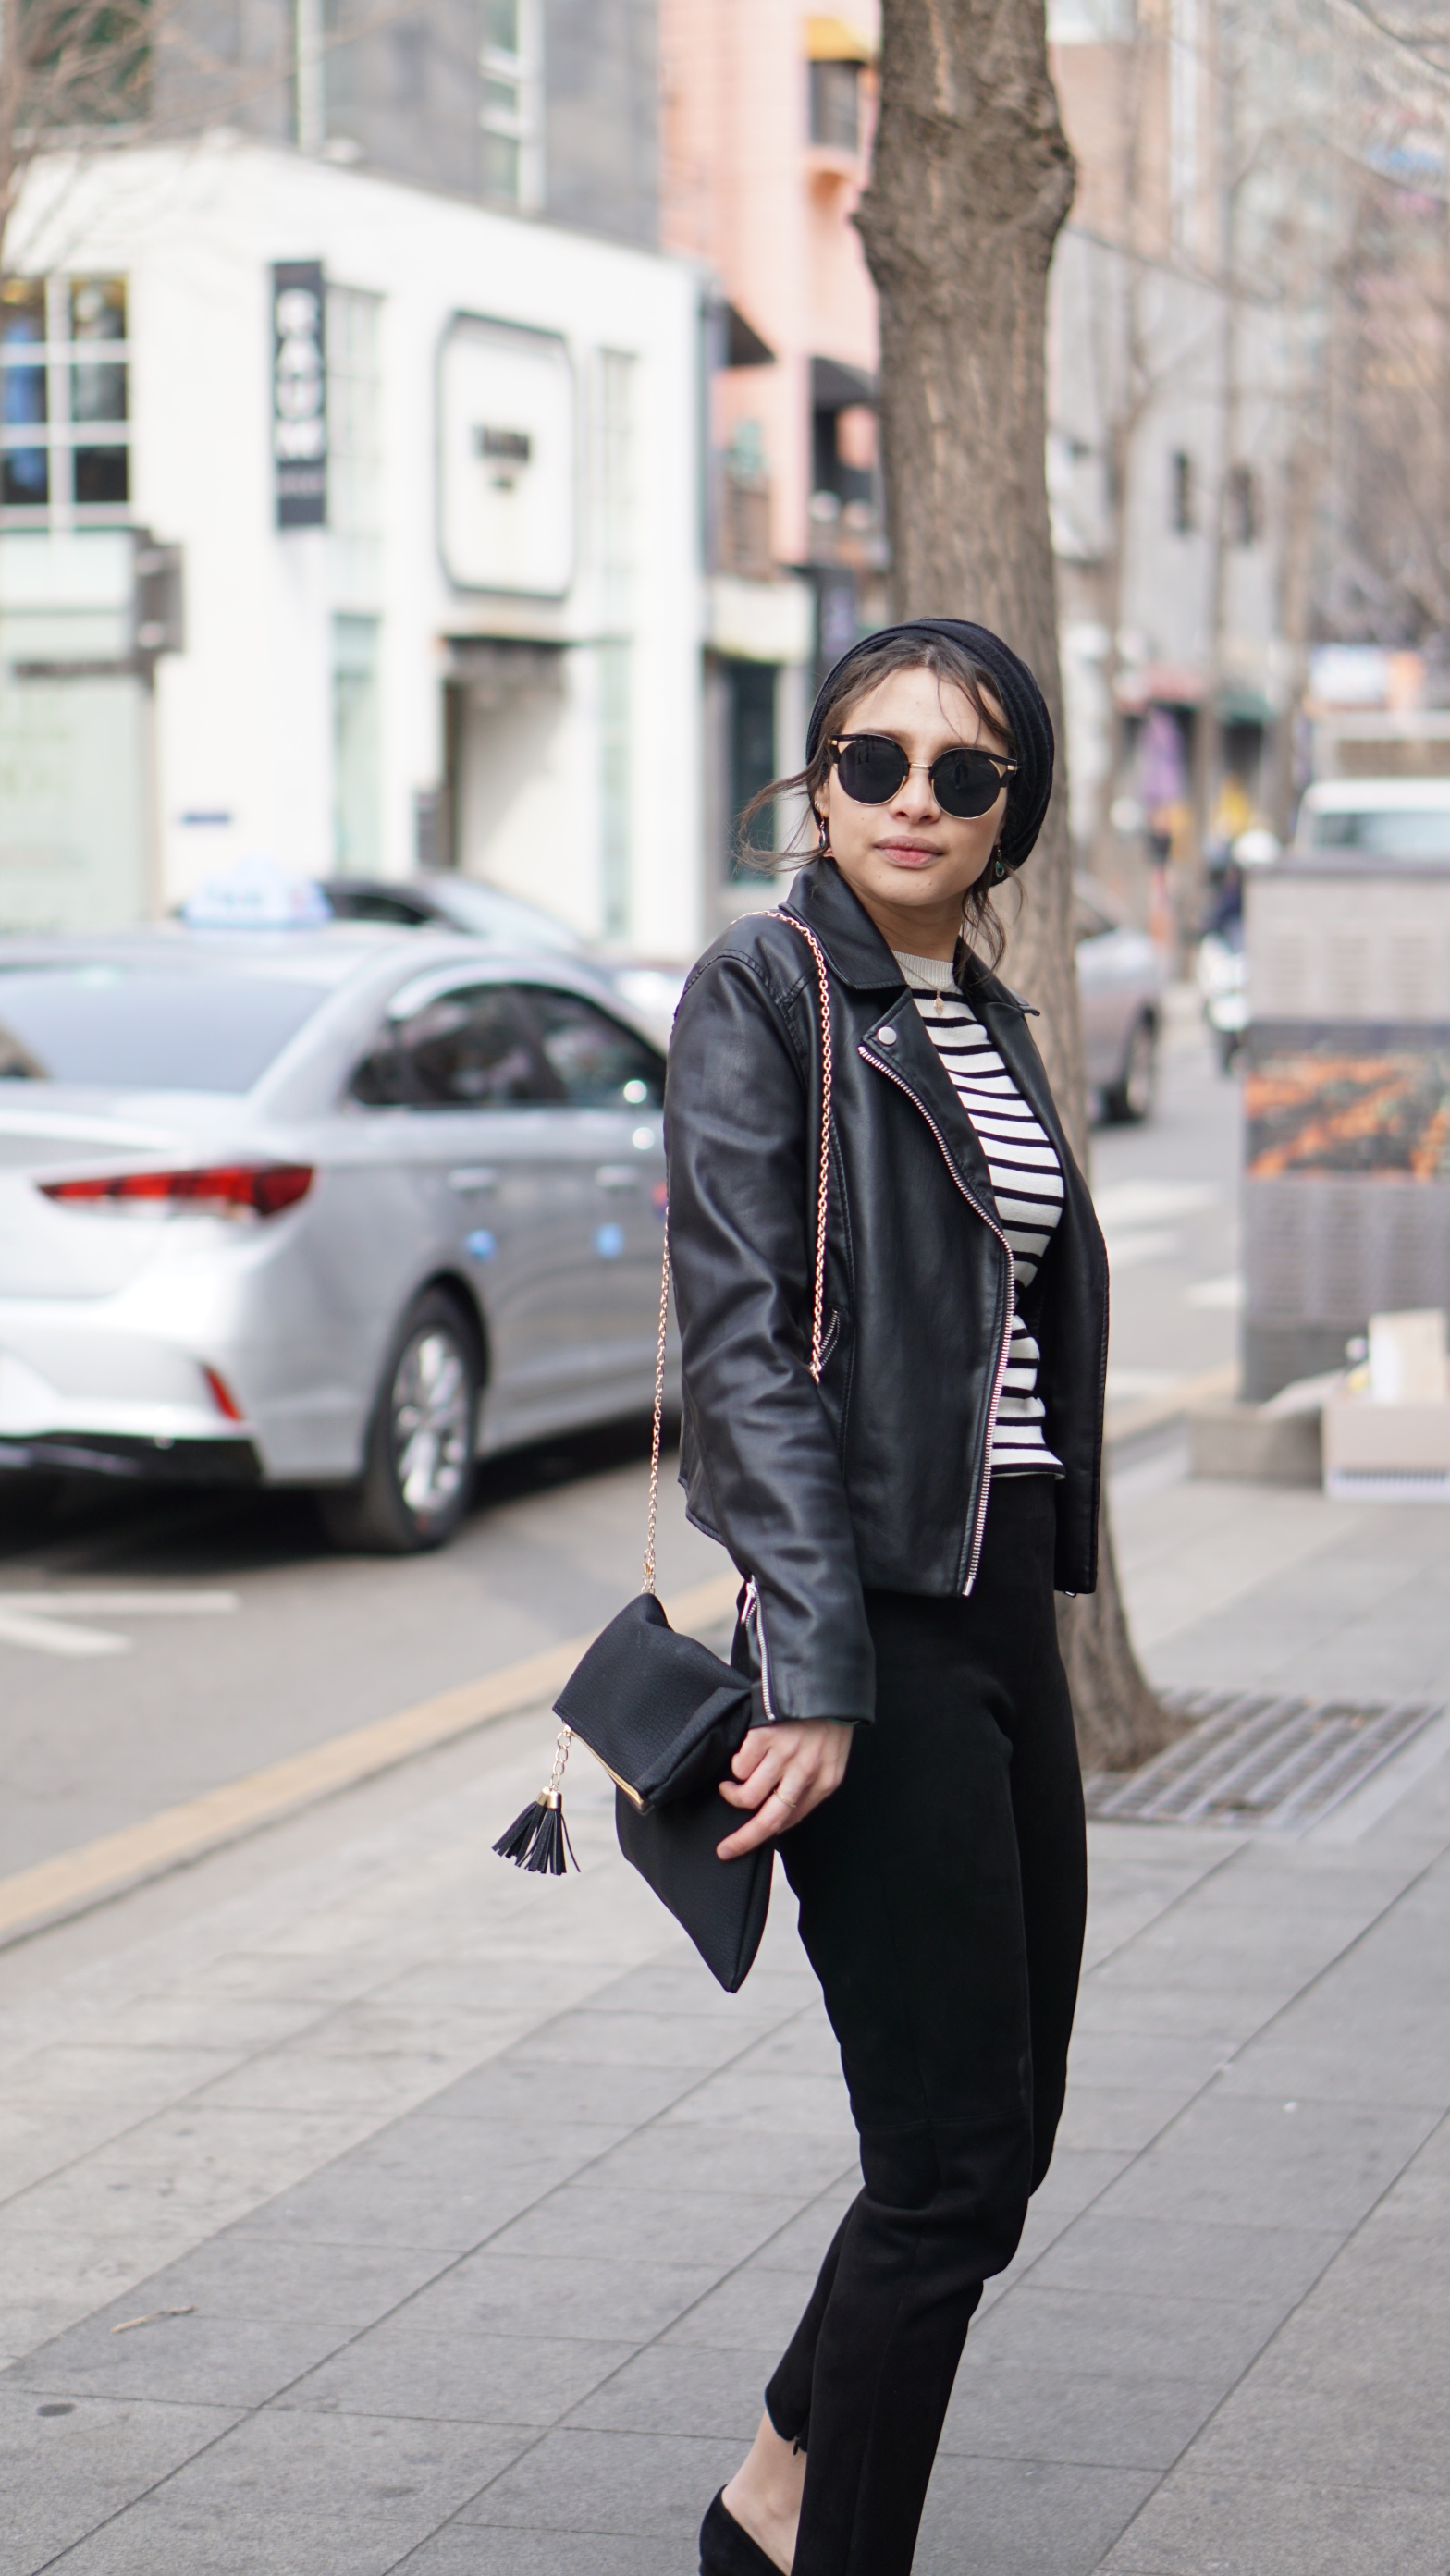 Parisian_woman_on_street_wearing_black_trousers_breton_top_leather_jacket